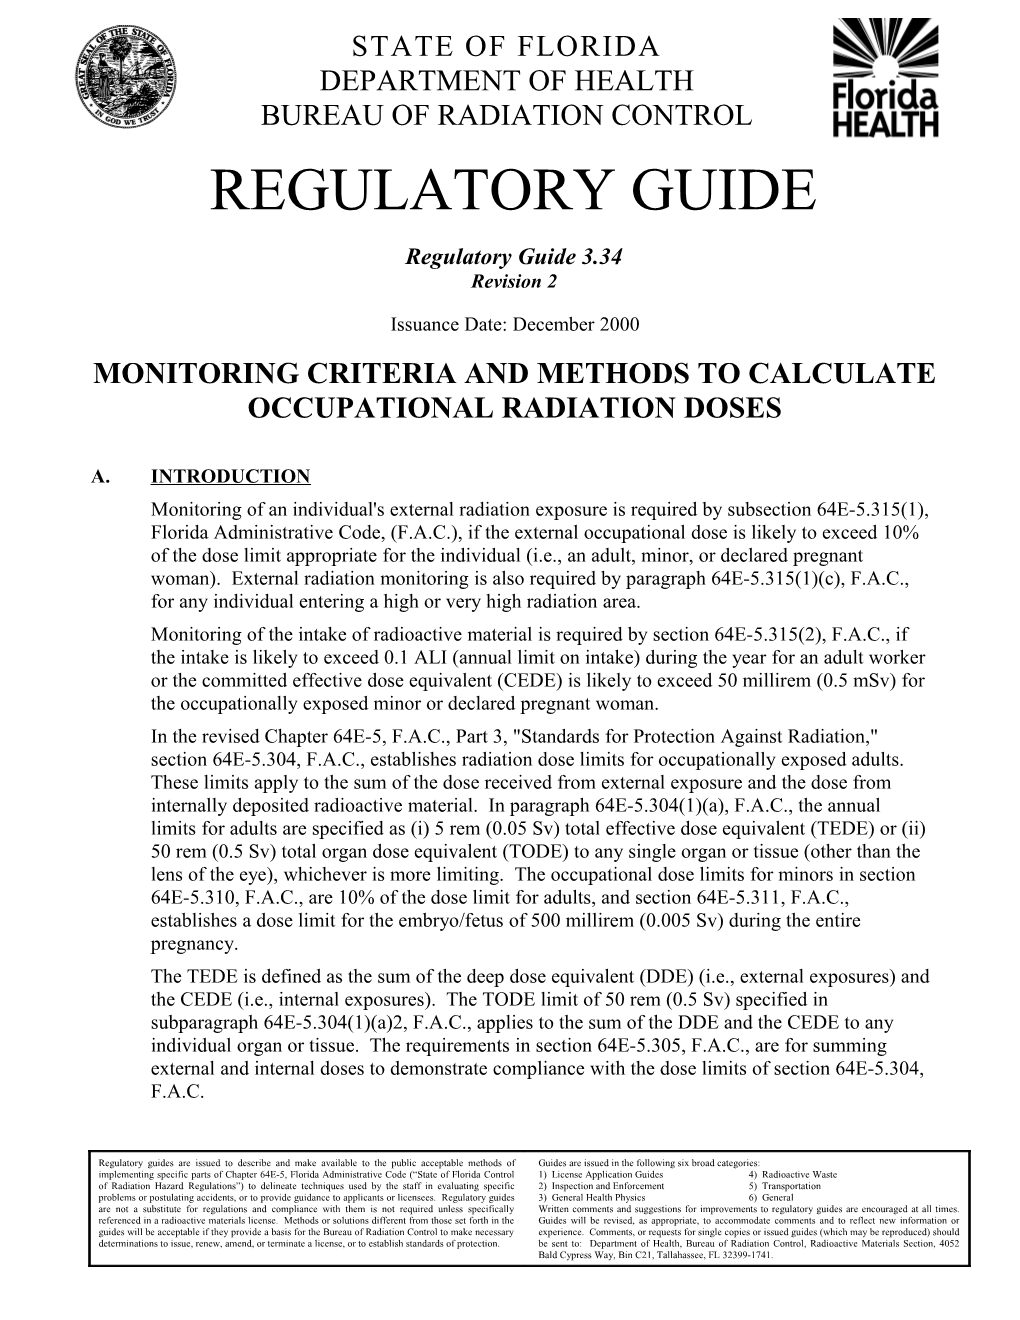 Regulatory Guide 3.34 Revision 2